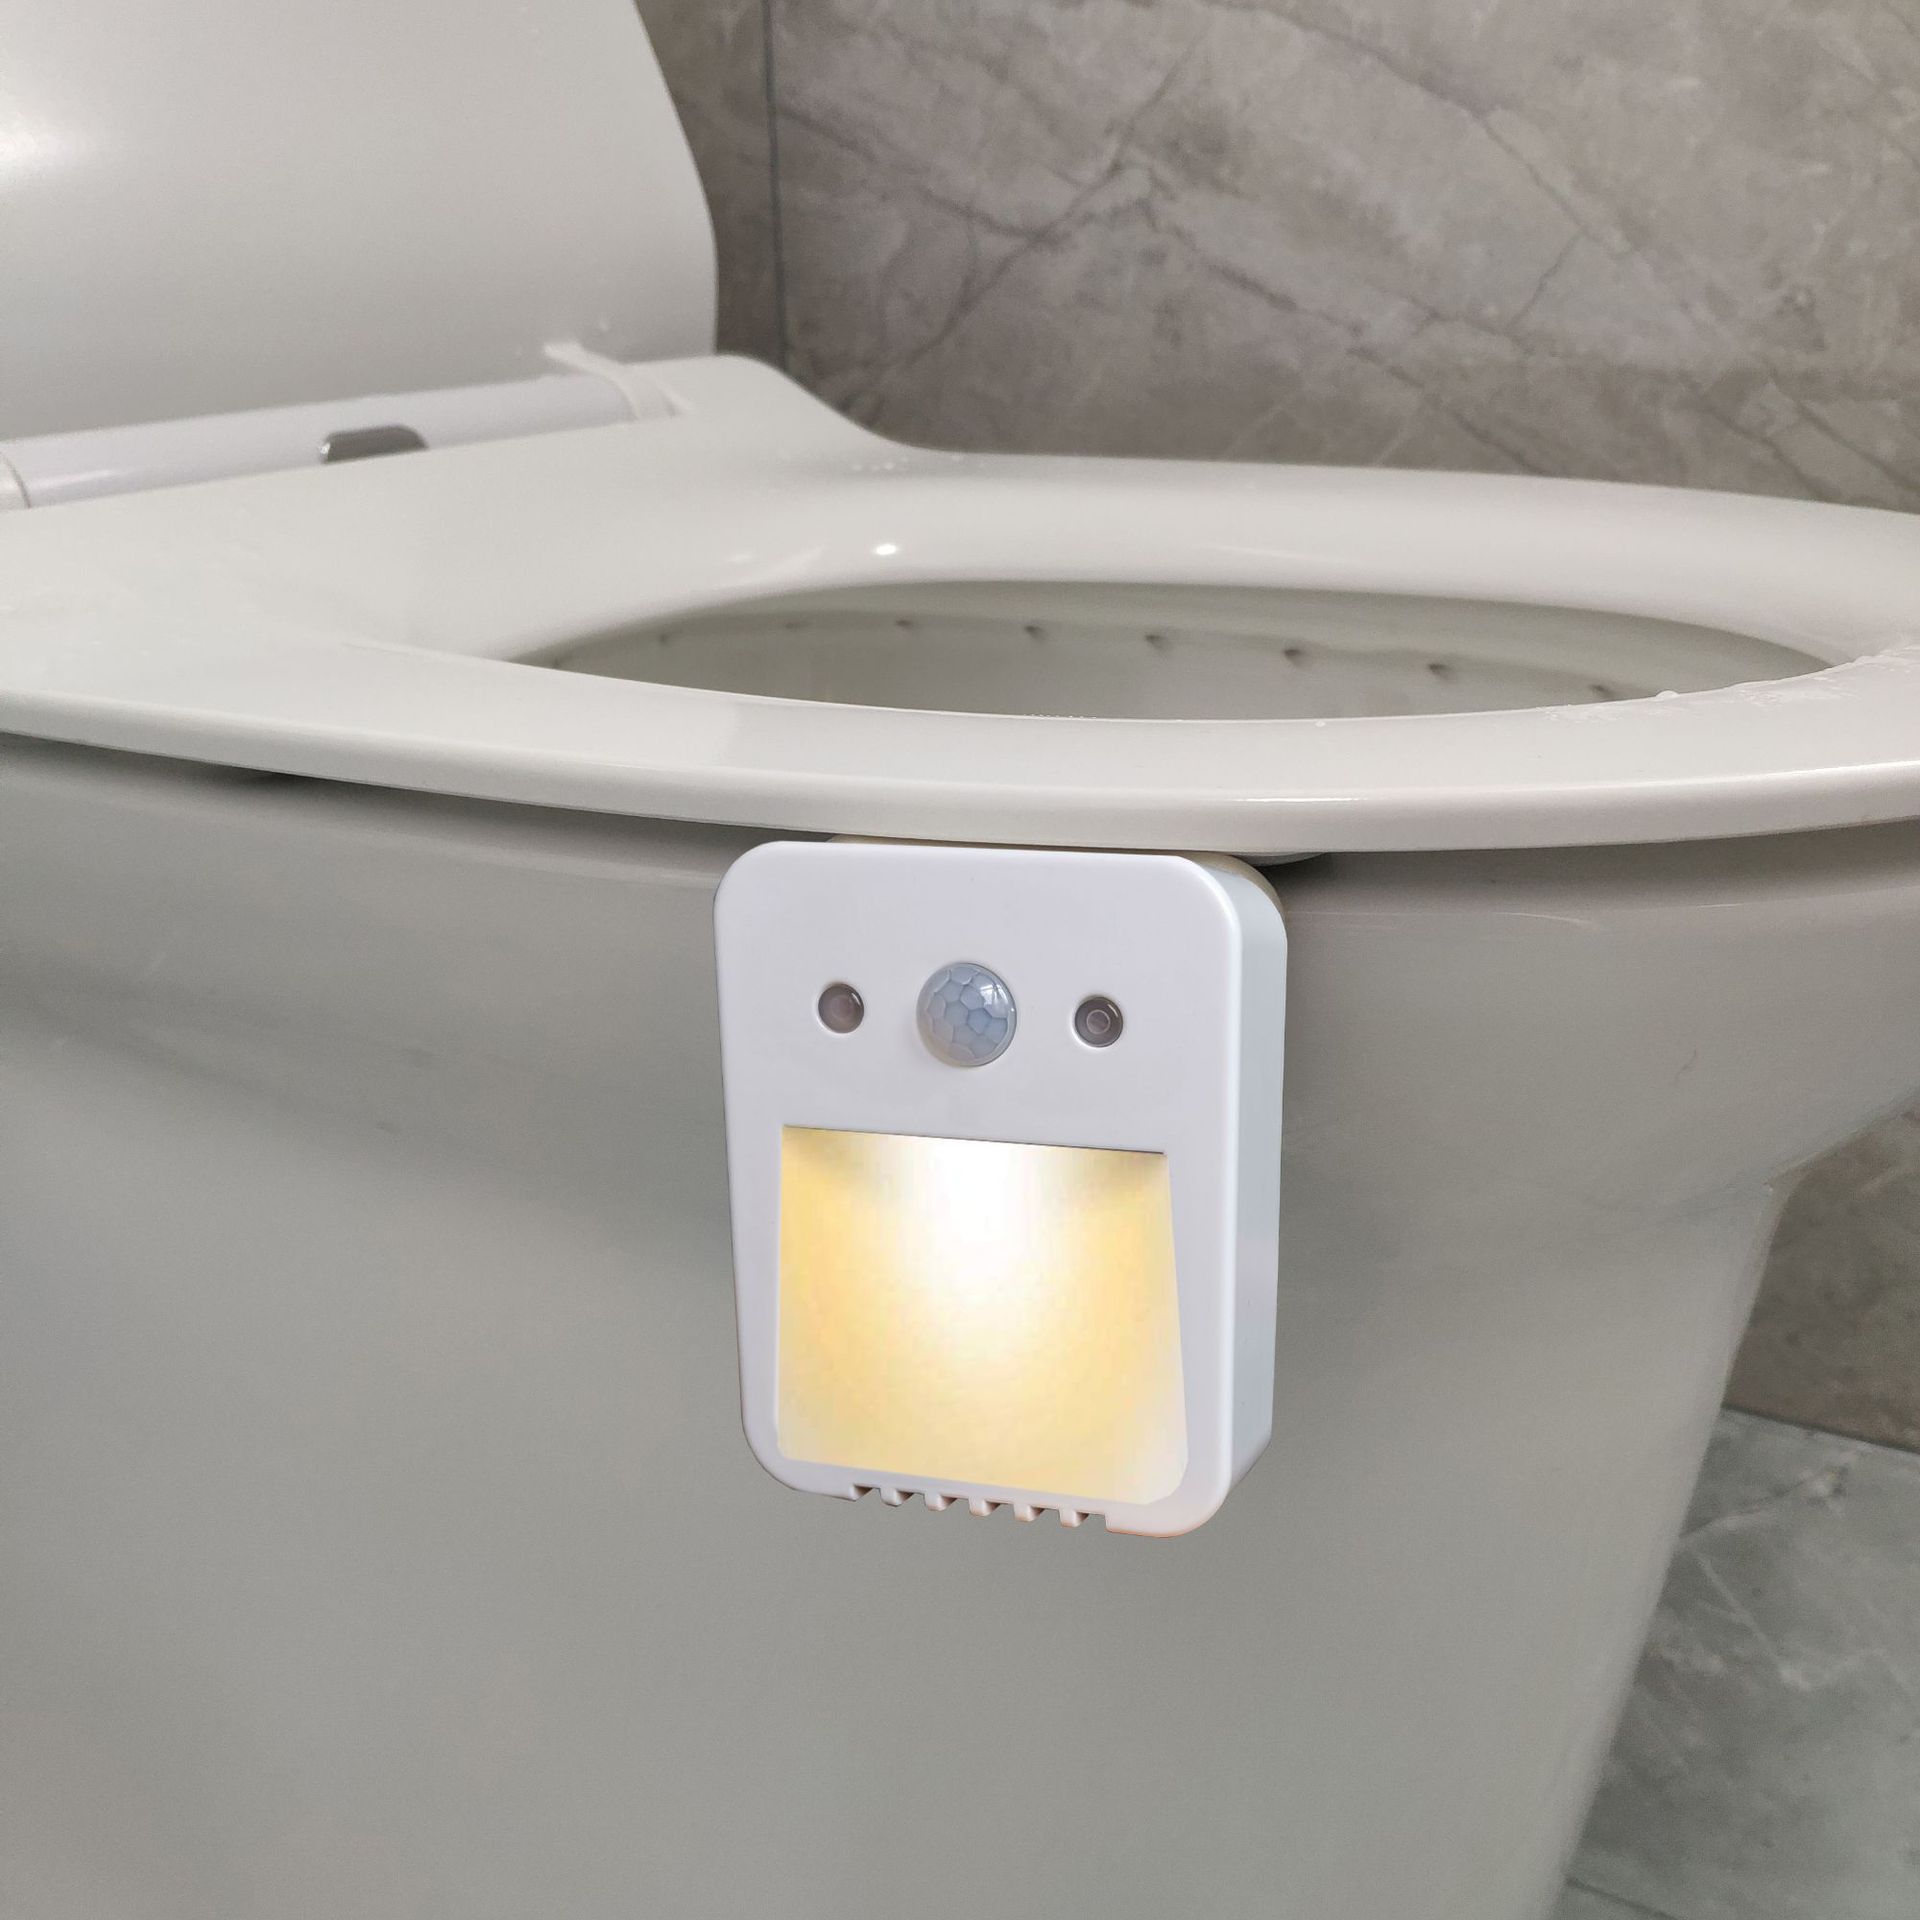 16-Colors-LED-Induction-Toilet-Light-With-Aromatherapy-Toilet-Sensor-Night-Light-Decor-1754296-2